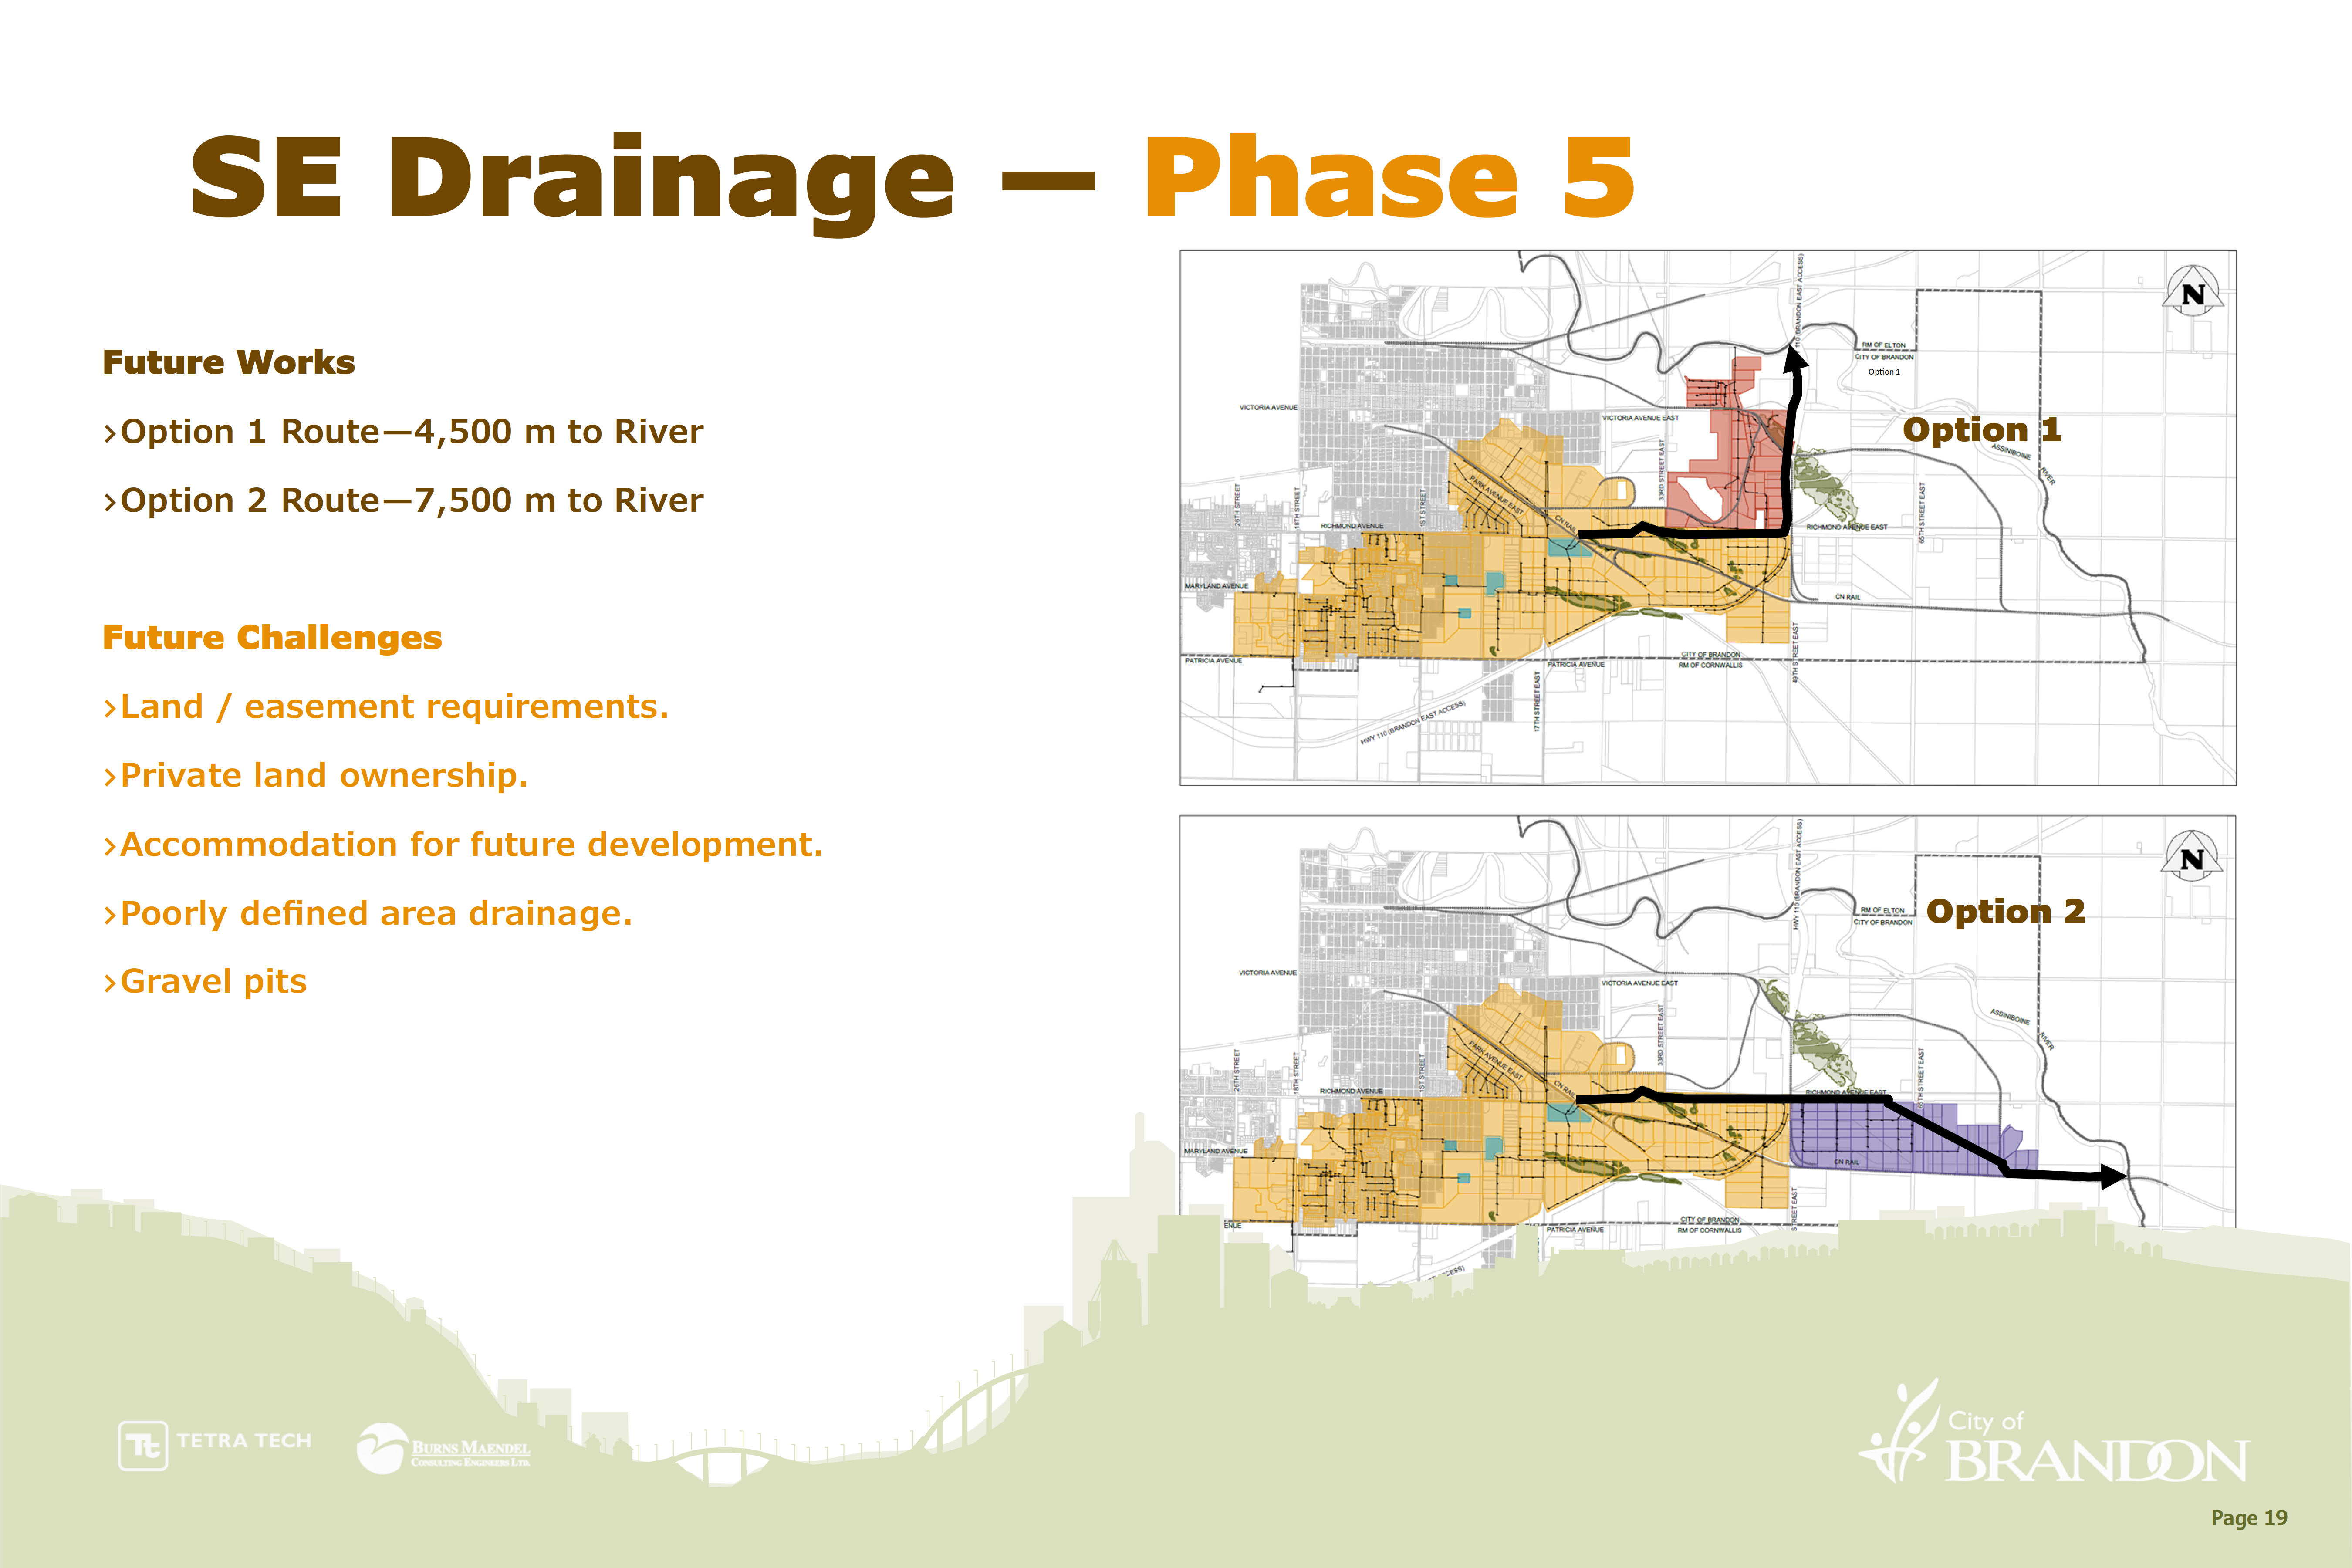 Southeast Drainage - Phase 5